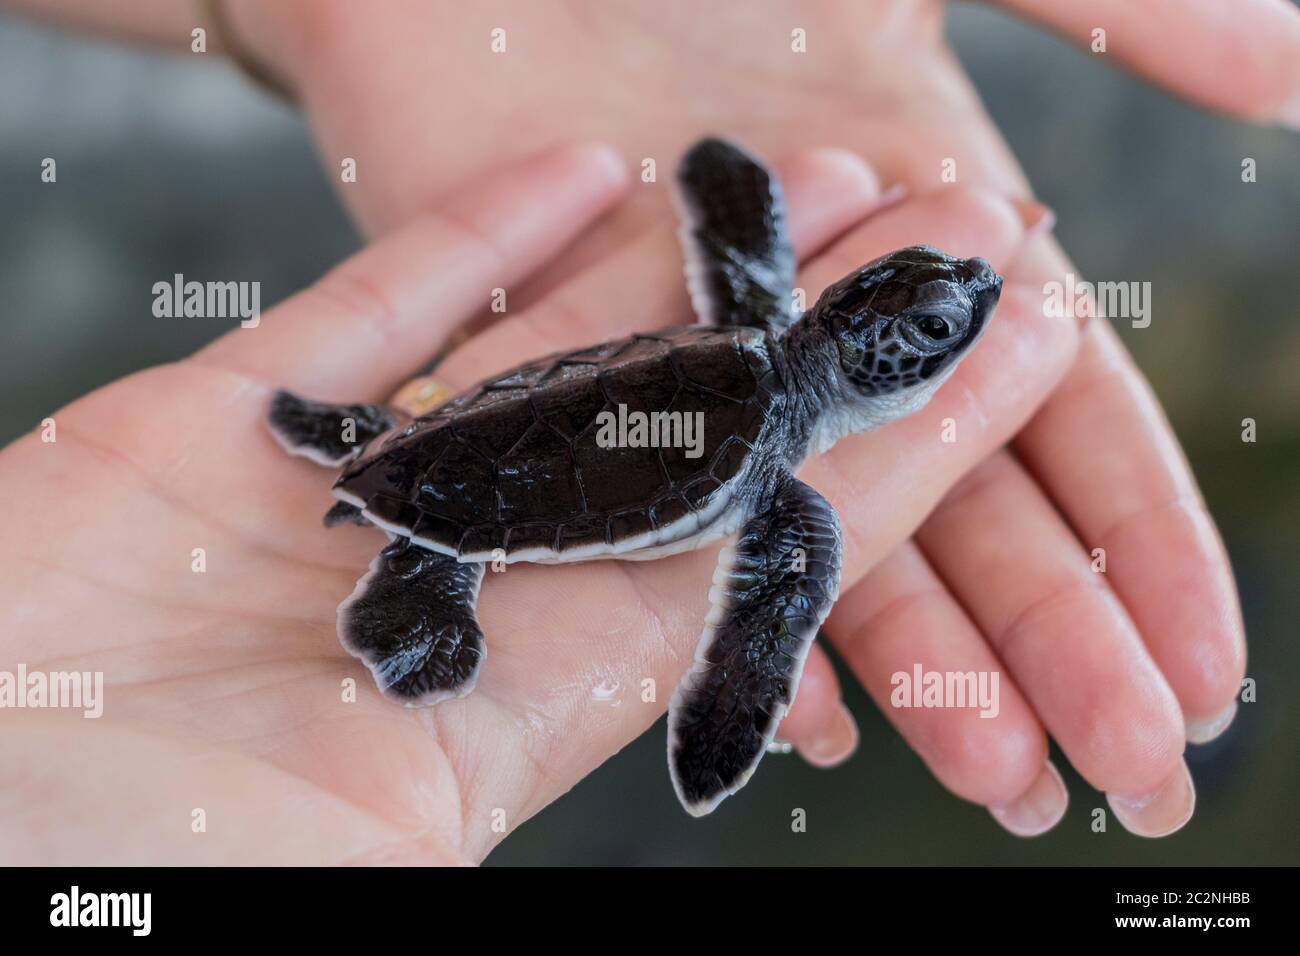 Cue black baby turtle on hands. Sri Lanka. Stock Photo